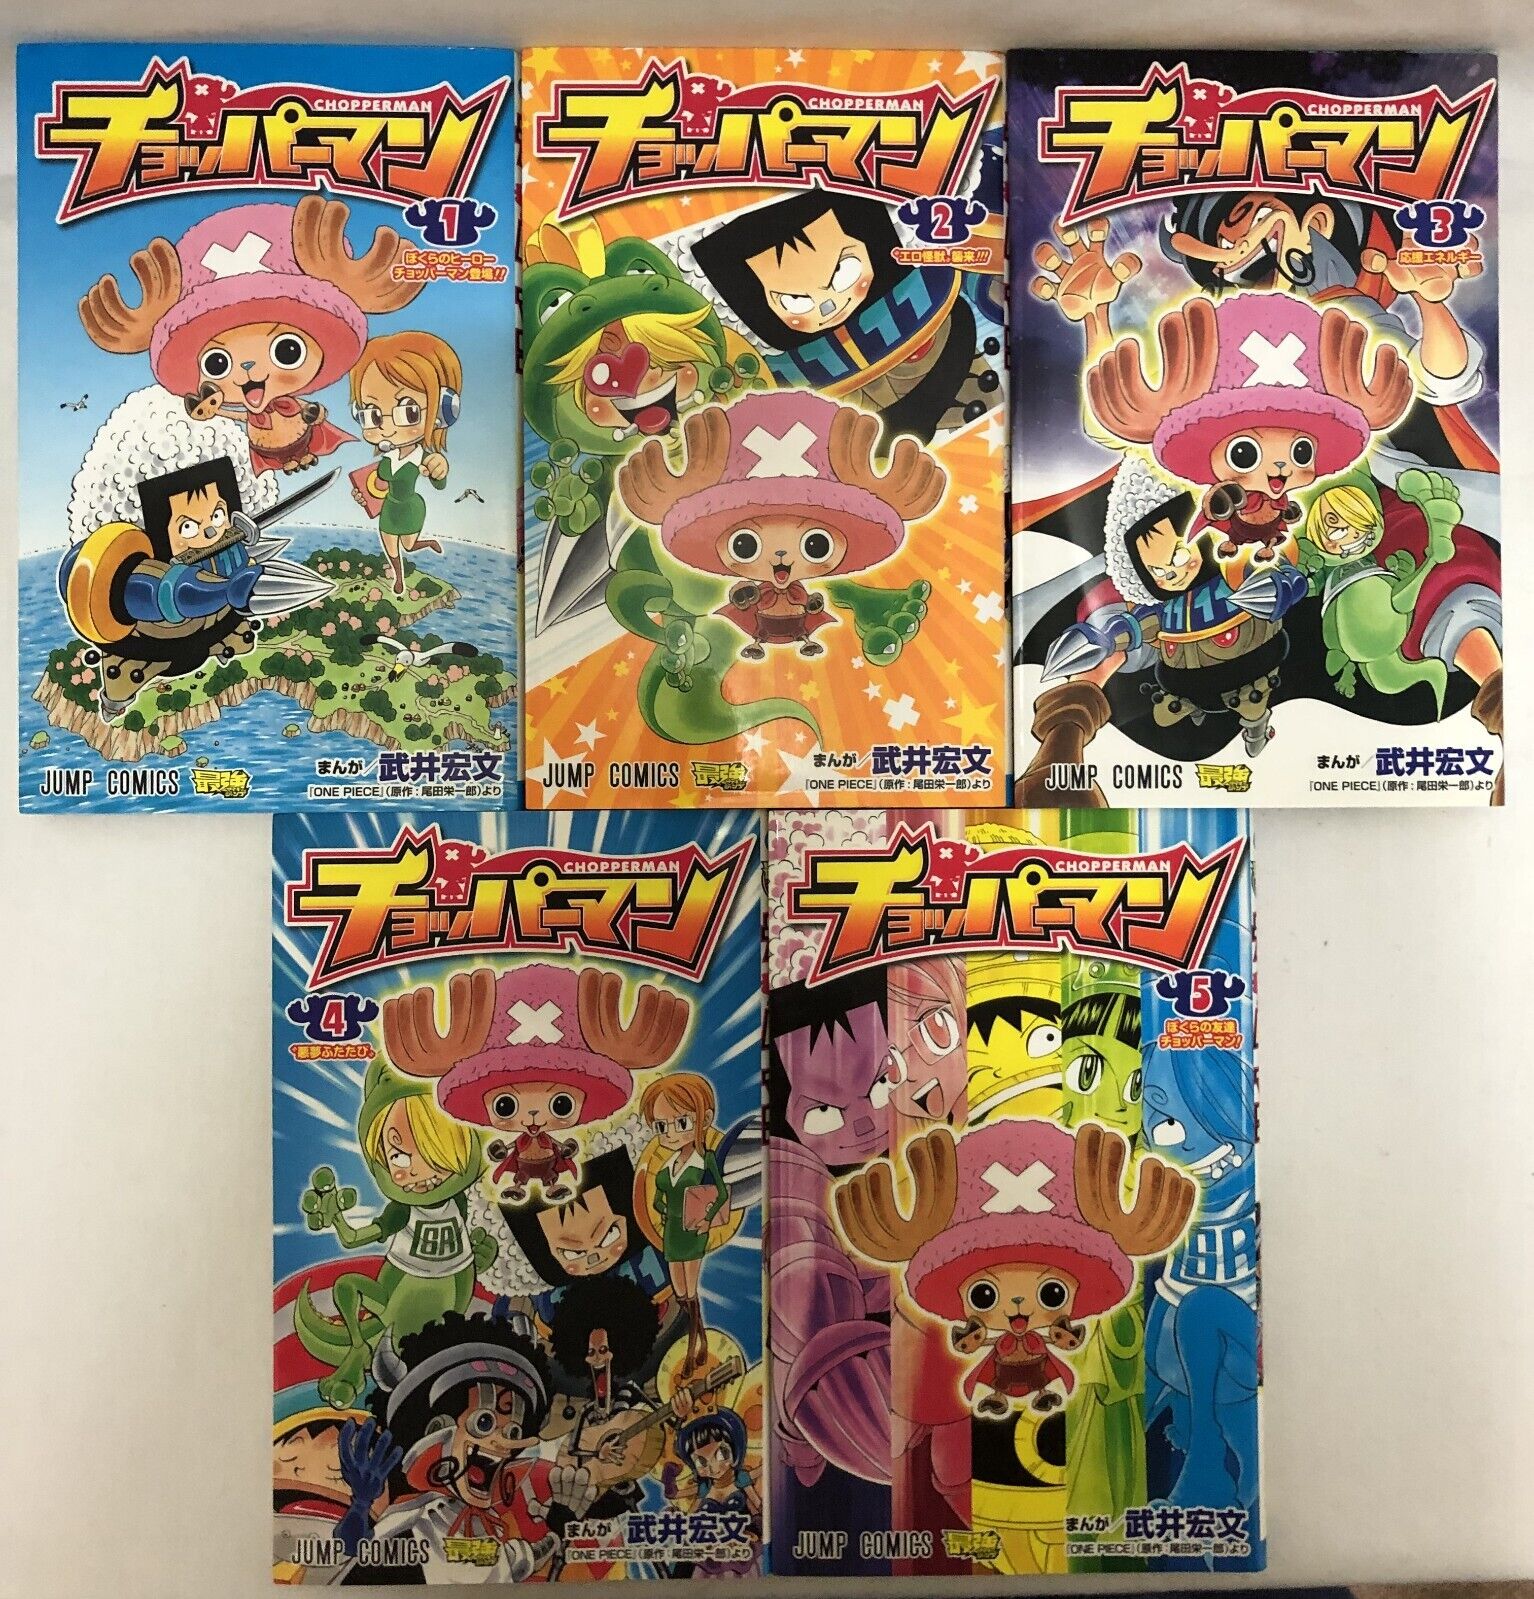 Chopper Man Vol. 1 - 5 Manga Bundle - One Piece Manga Set Jump Comics, One Piece